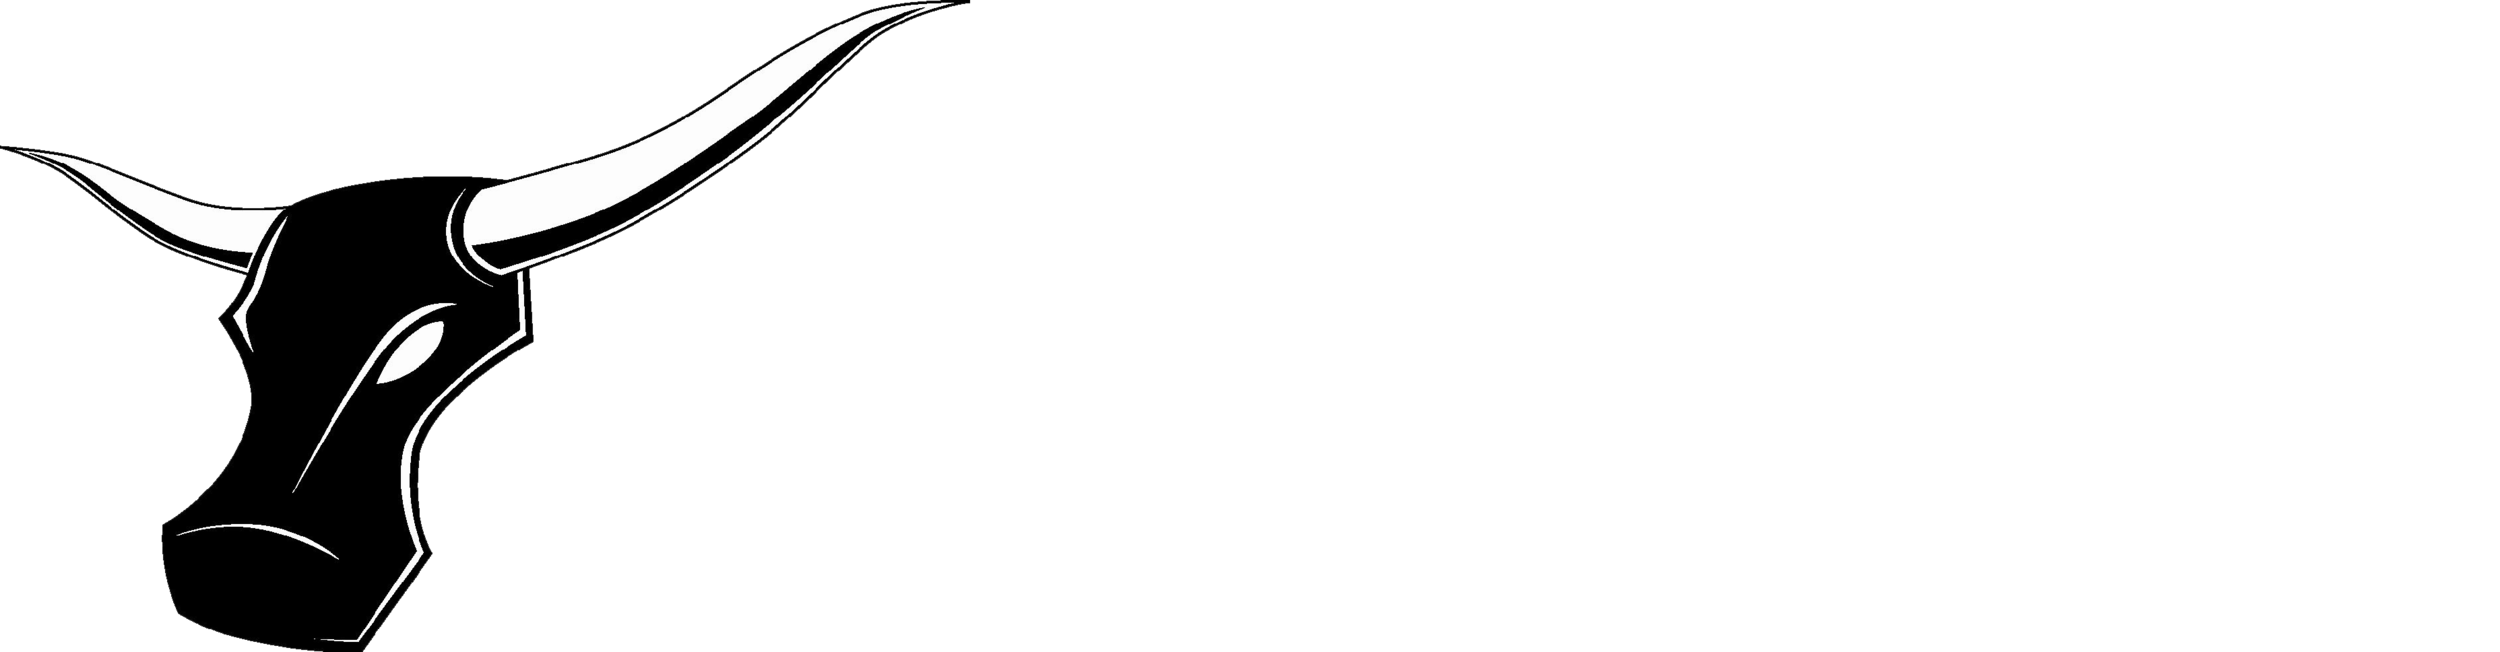  Longhorn Inspections, Inc.